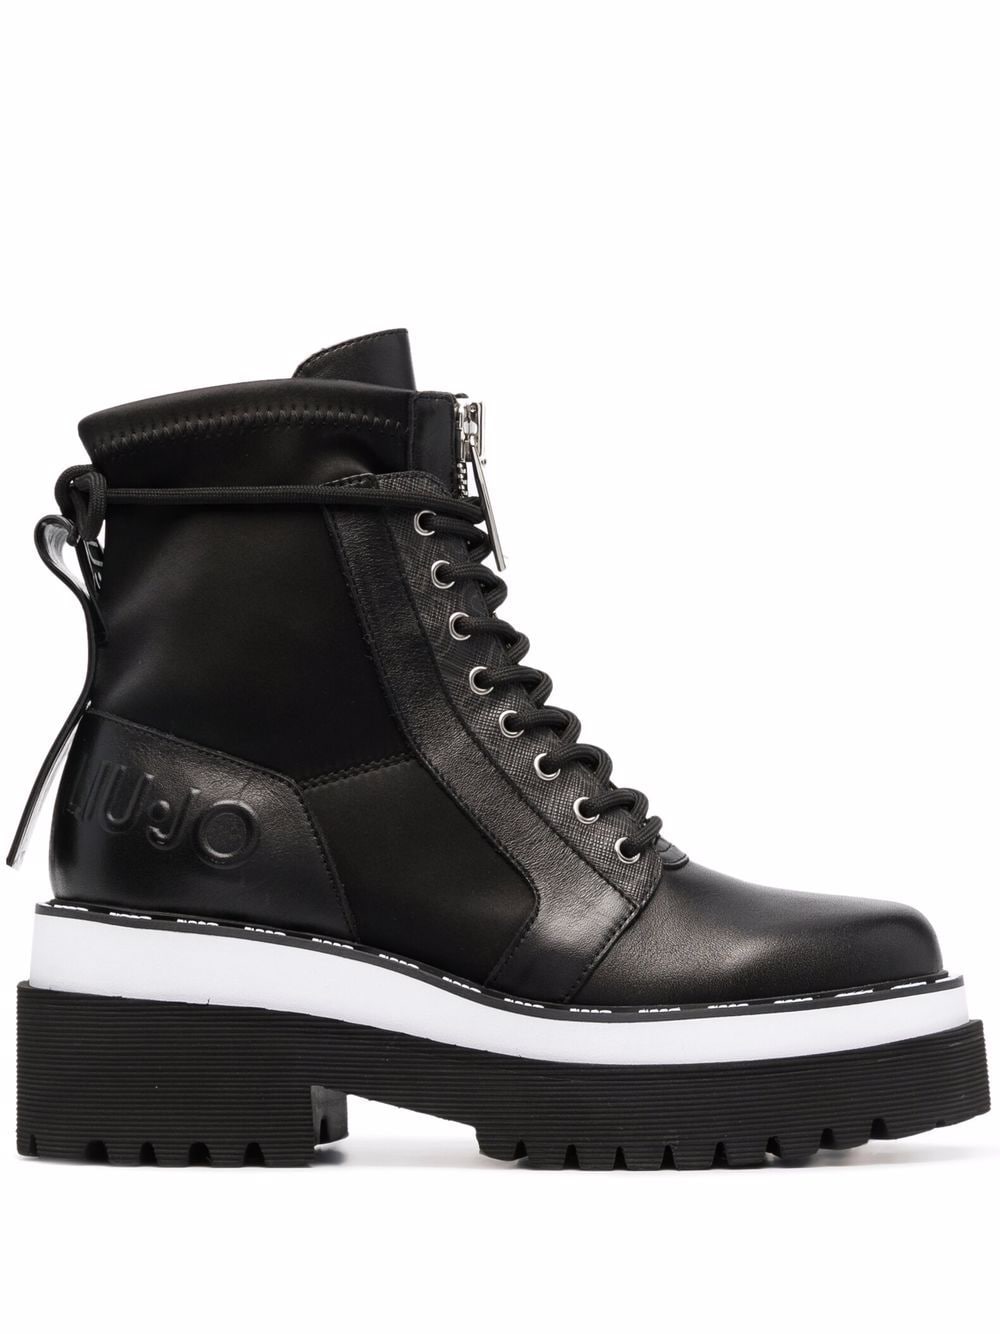 LIU JO embossed leather combat boots - Black von LIU JO